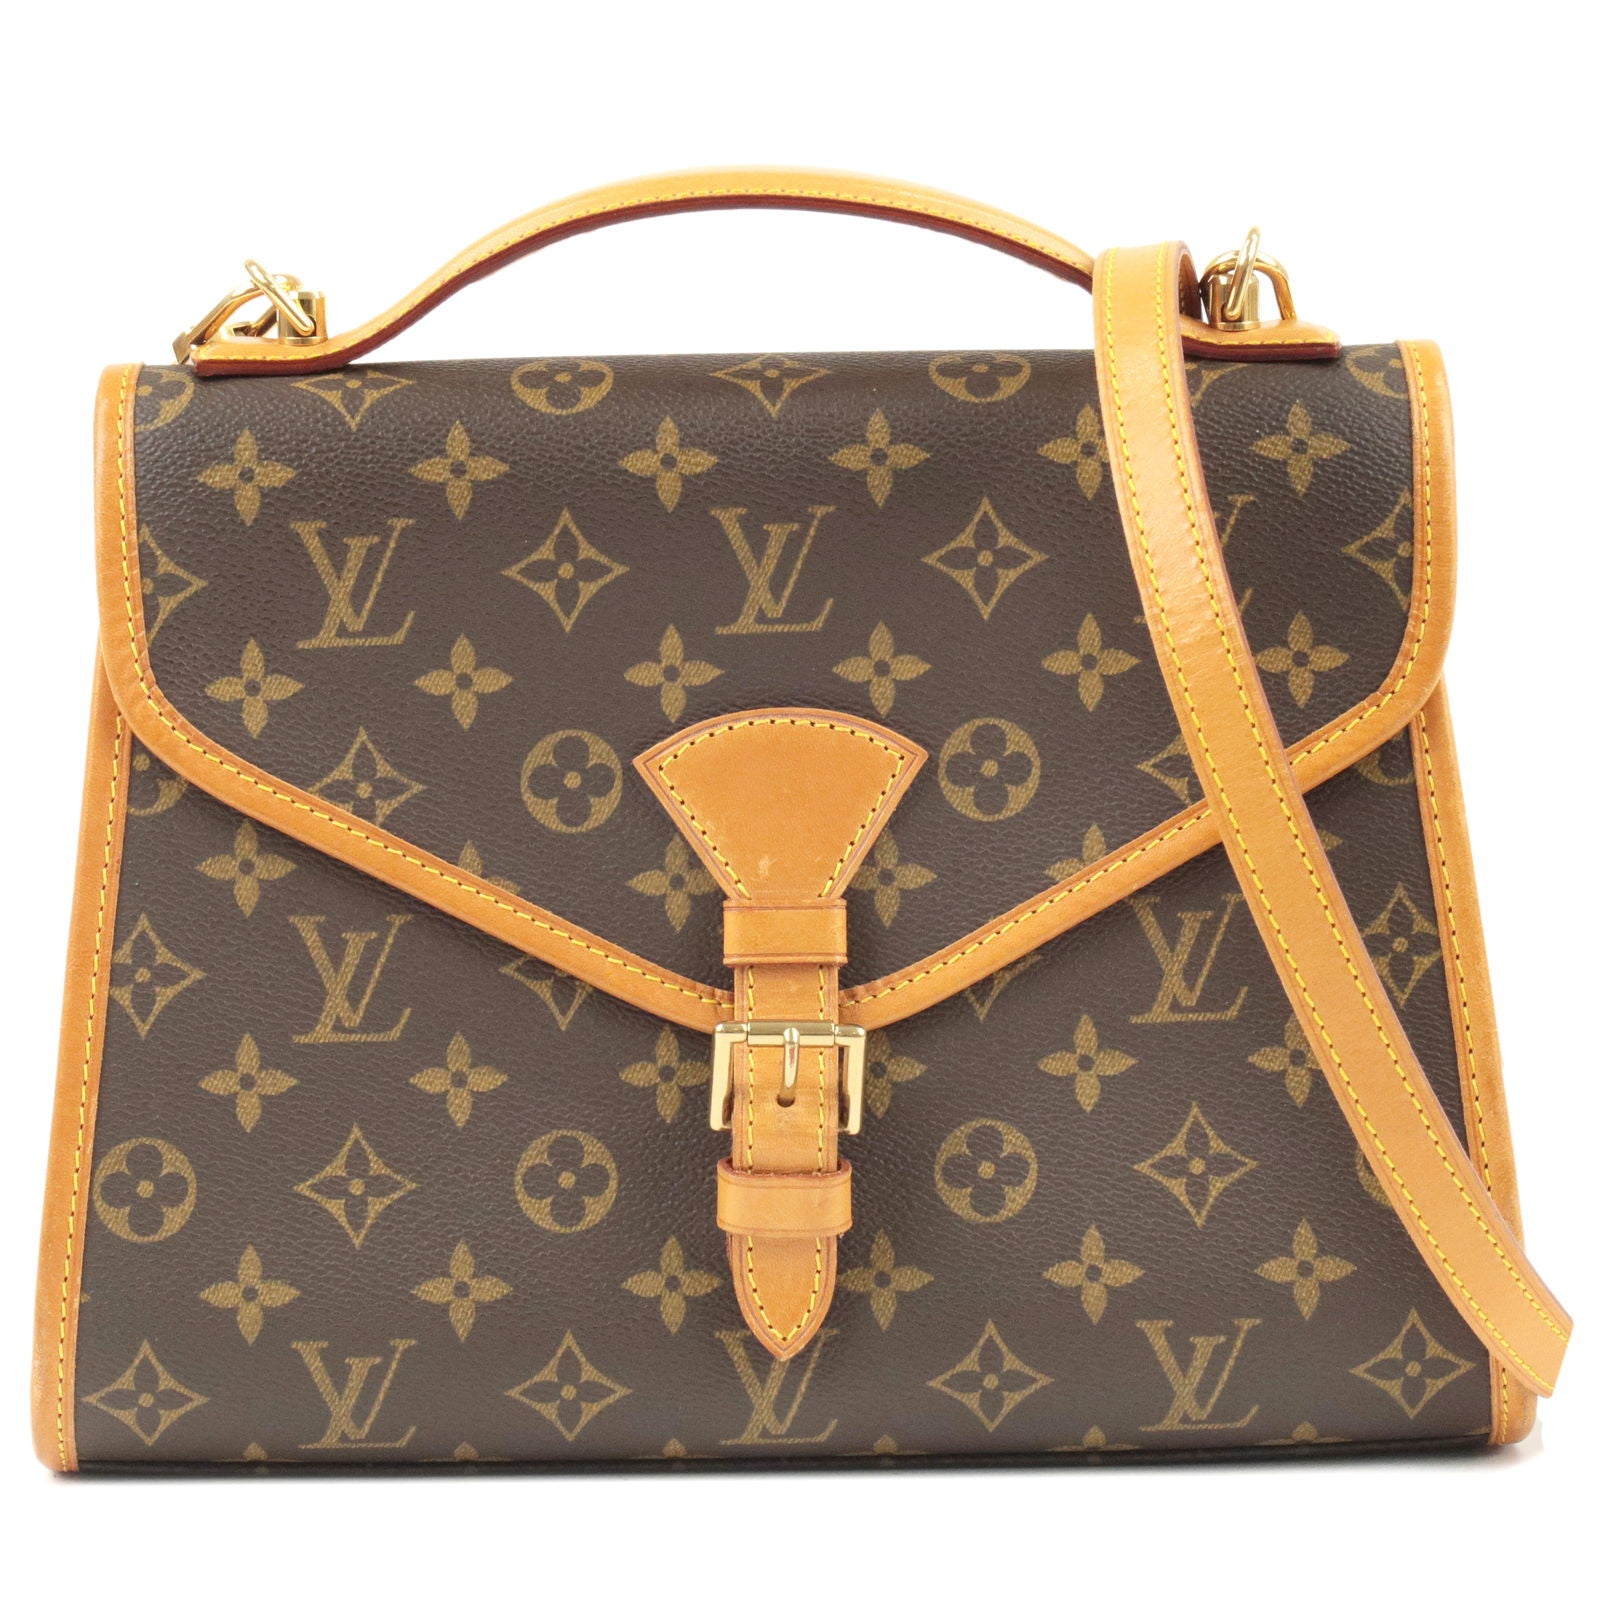 Louis+Vuitton+Bel+Air+Shoulder+Bag+Brown+Leather for sale online